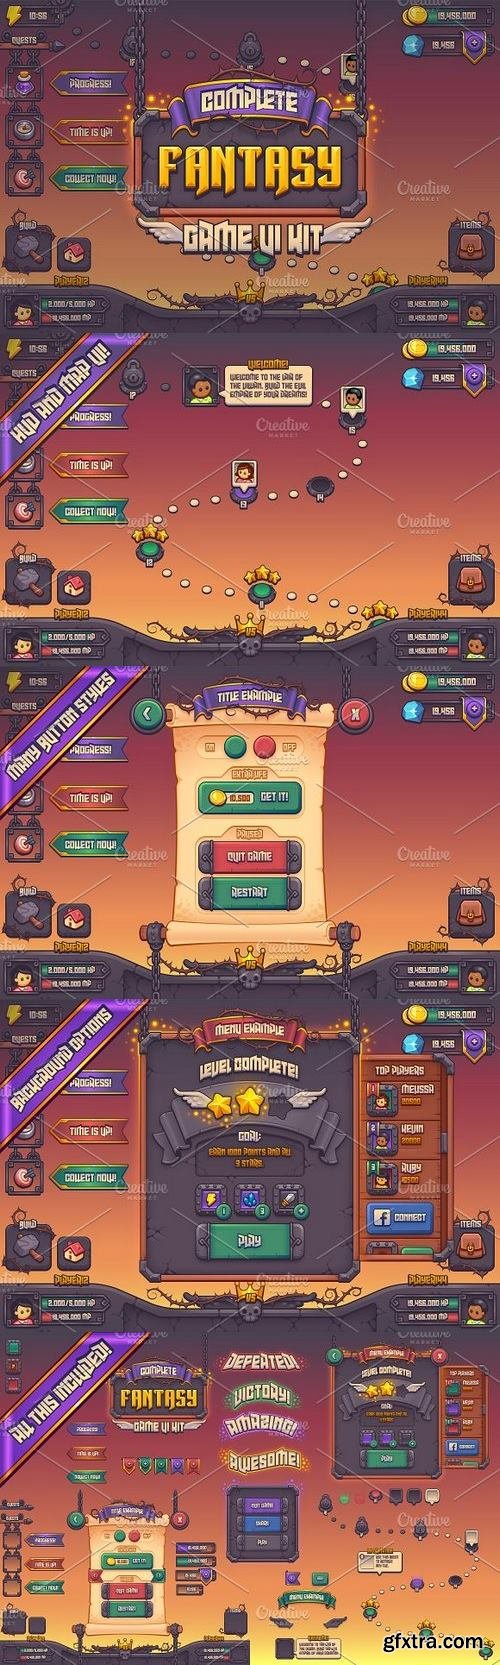 CM - Complete Fantasy Game UI kit 959421